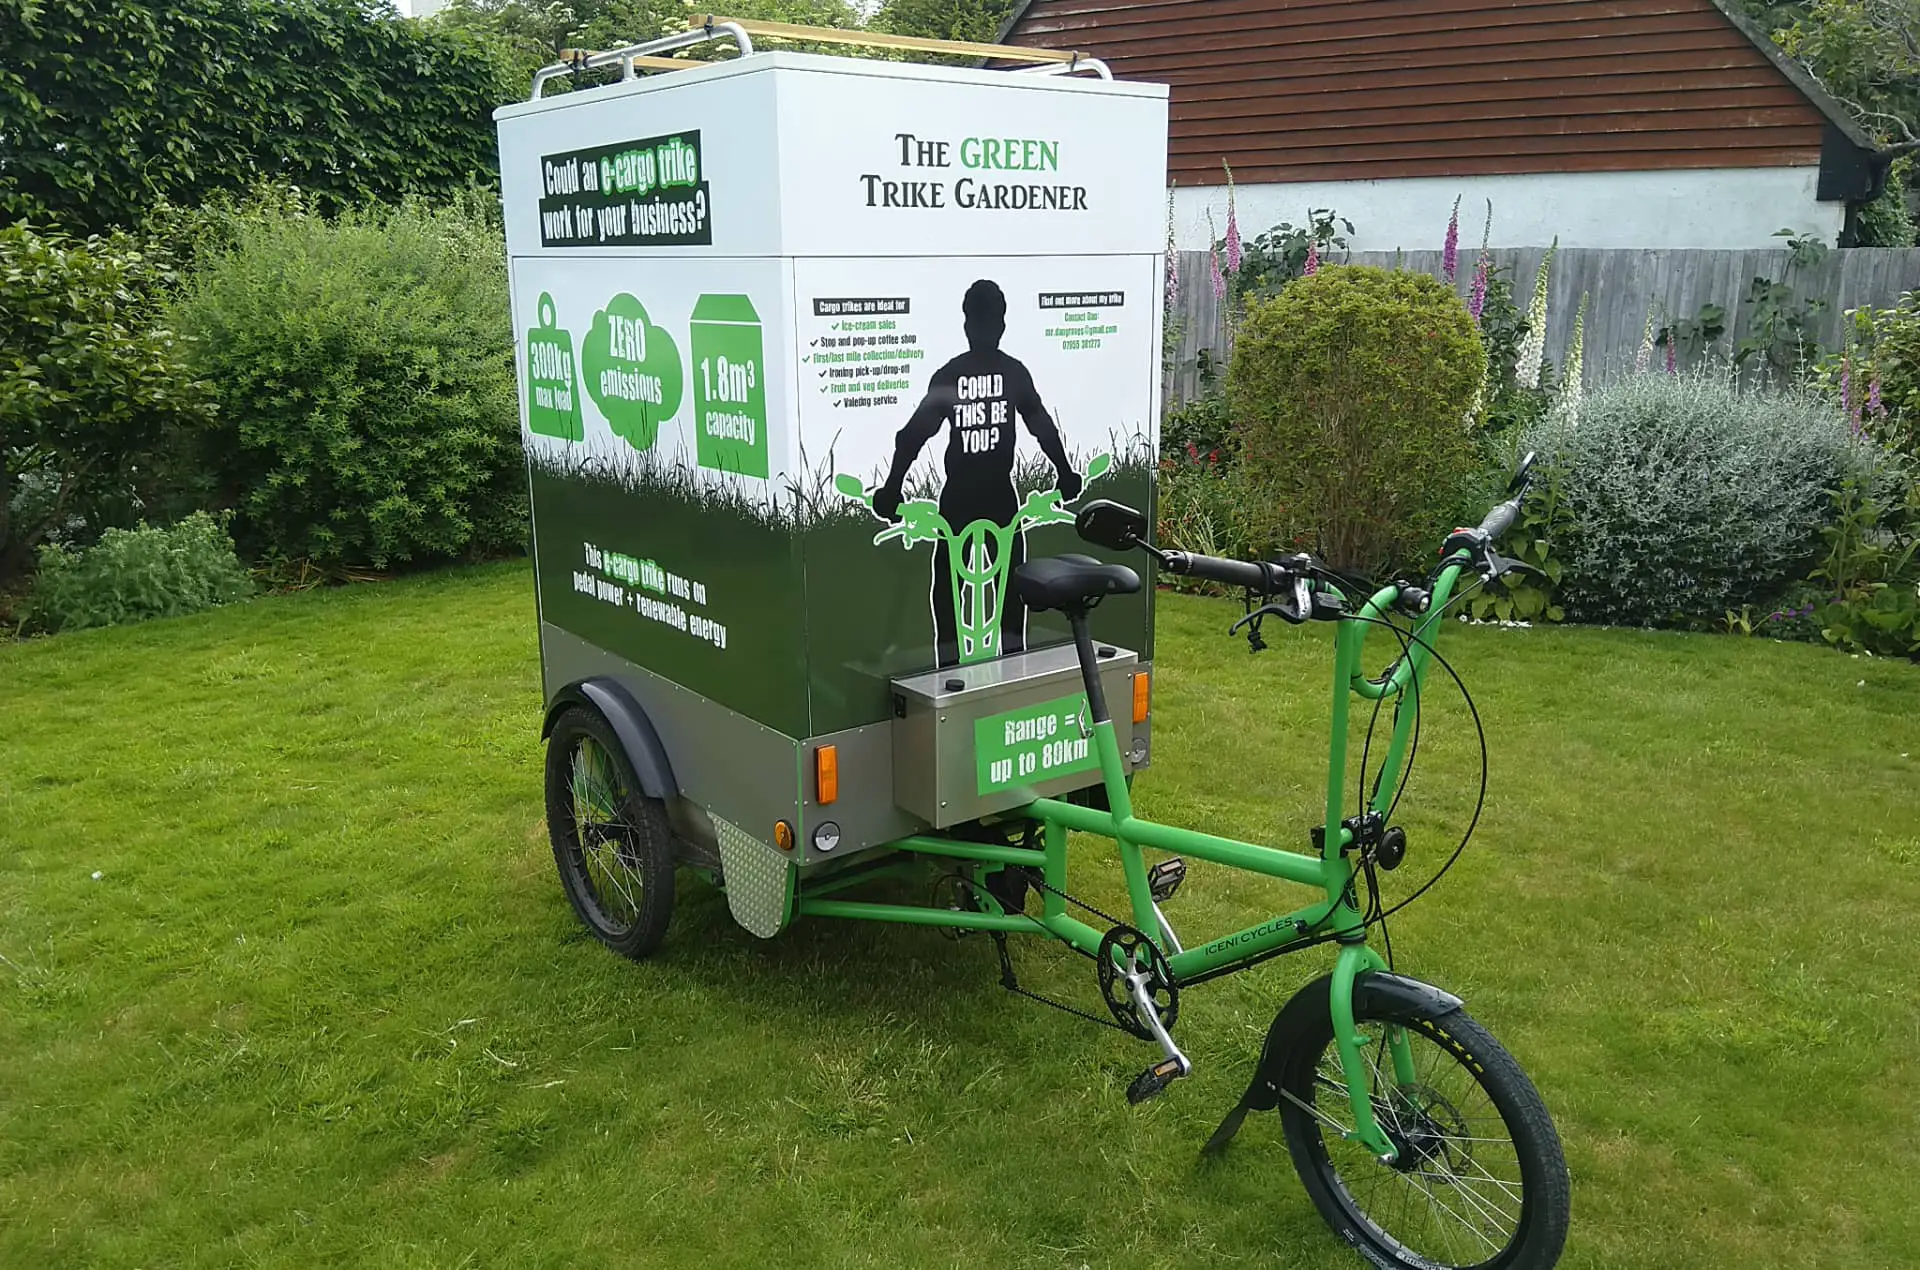 The Green Trike Gardener's e-cargo trike